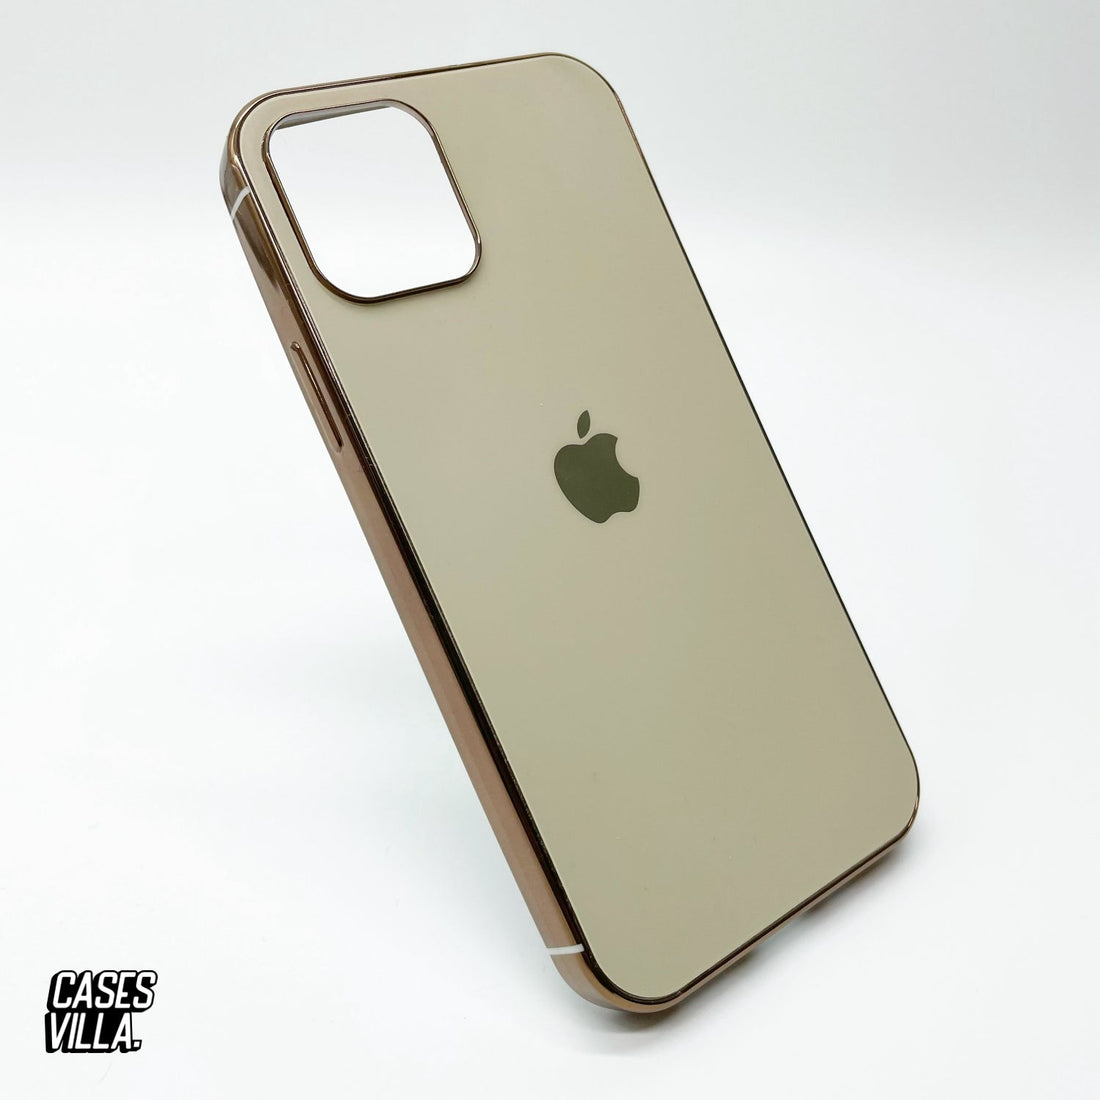 iPhone 12 Mini - MyCase Glass Finish Chrome Border Soft Case Cover